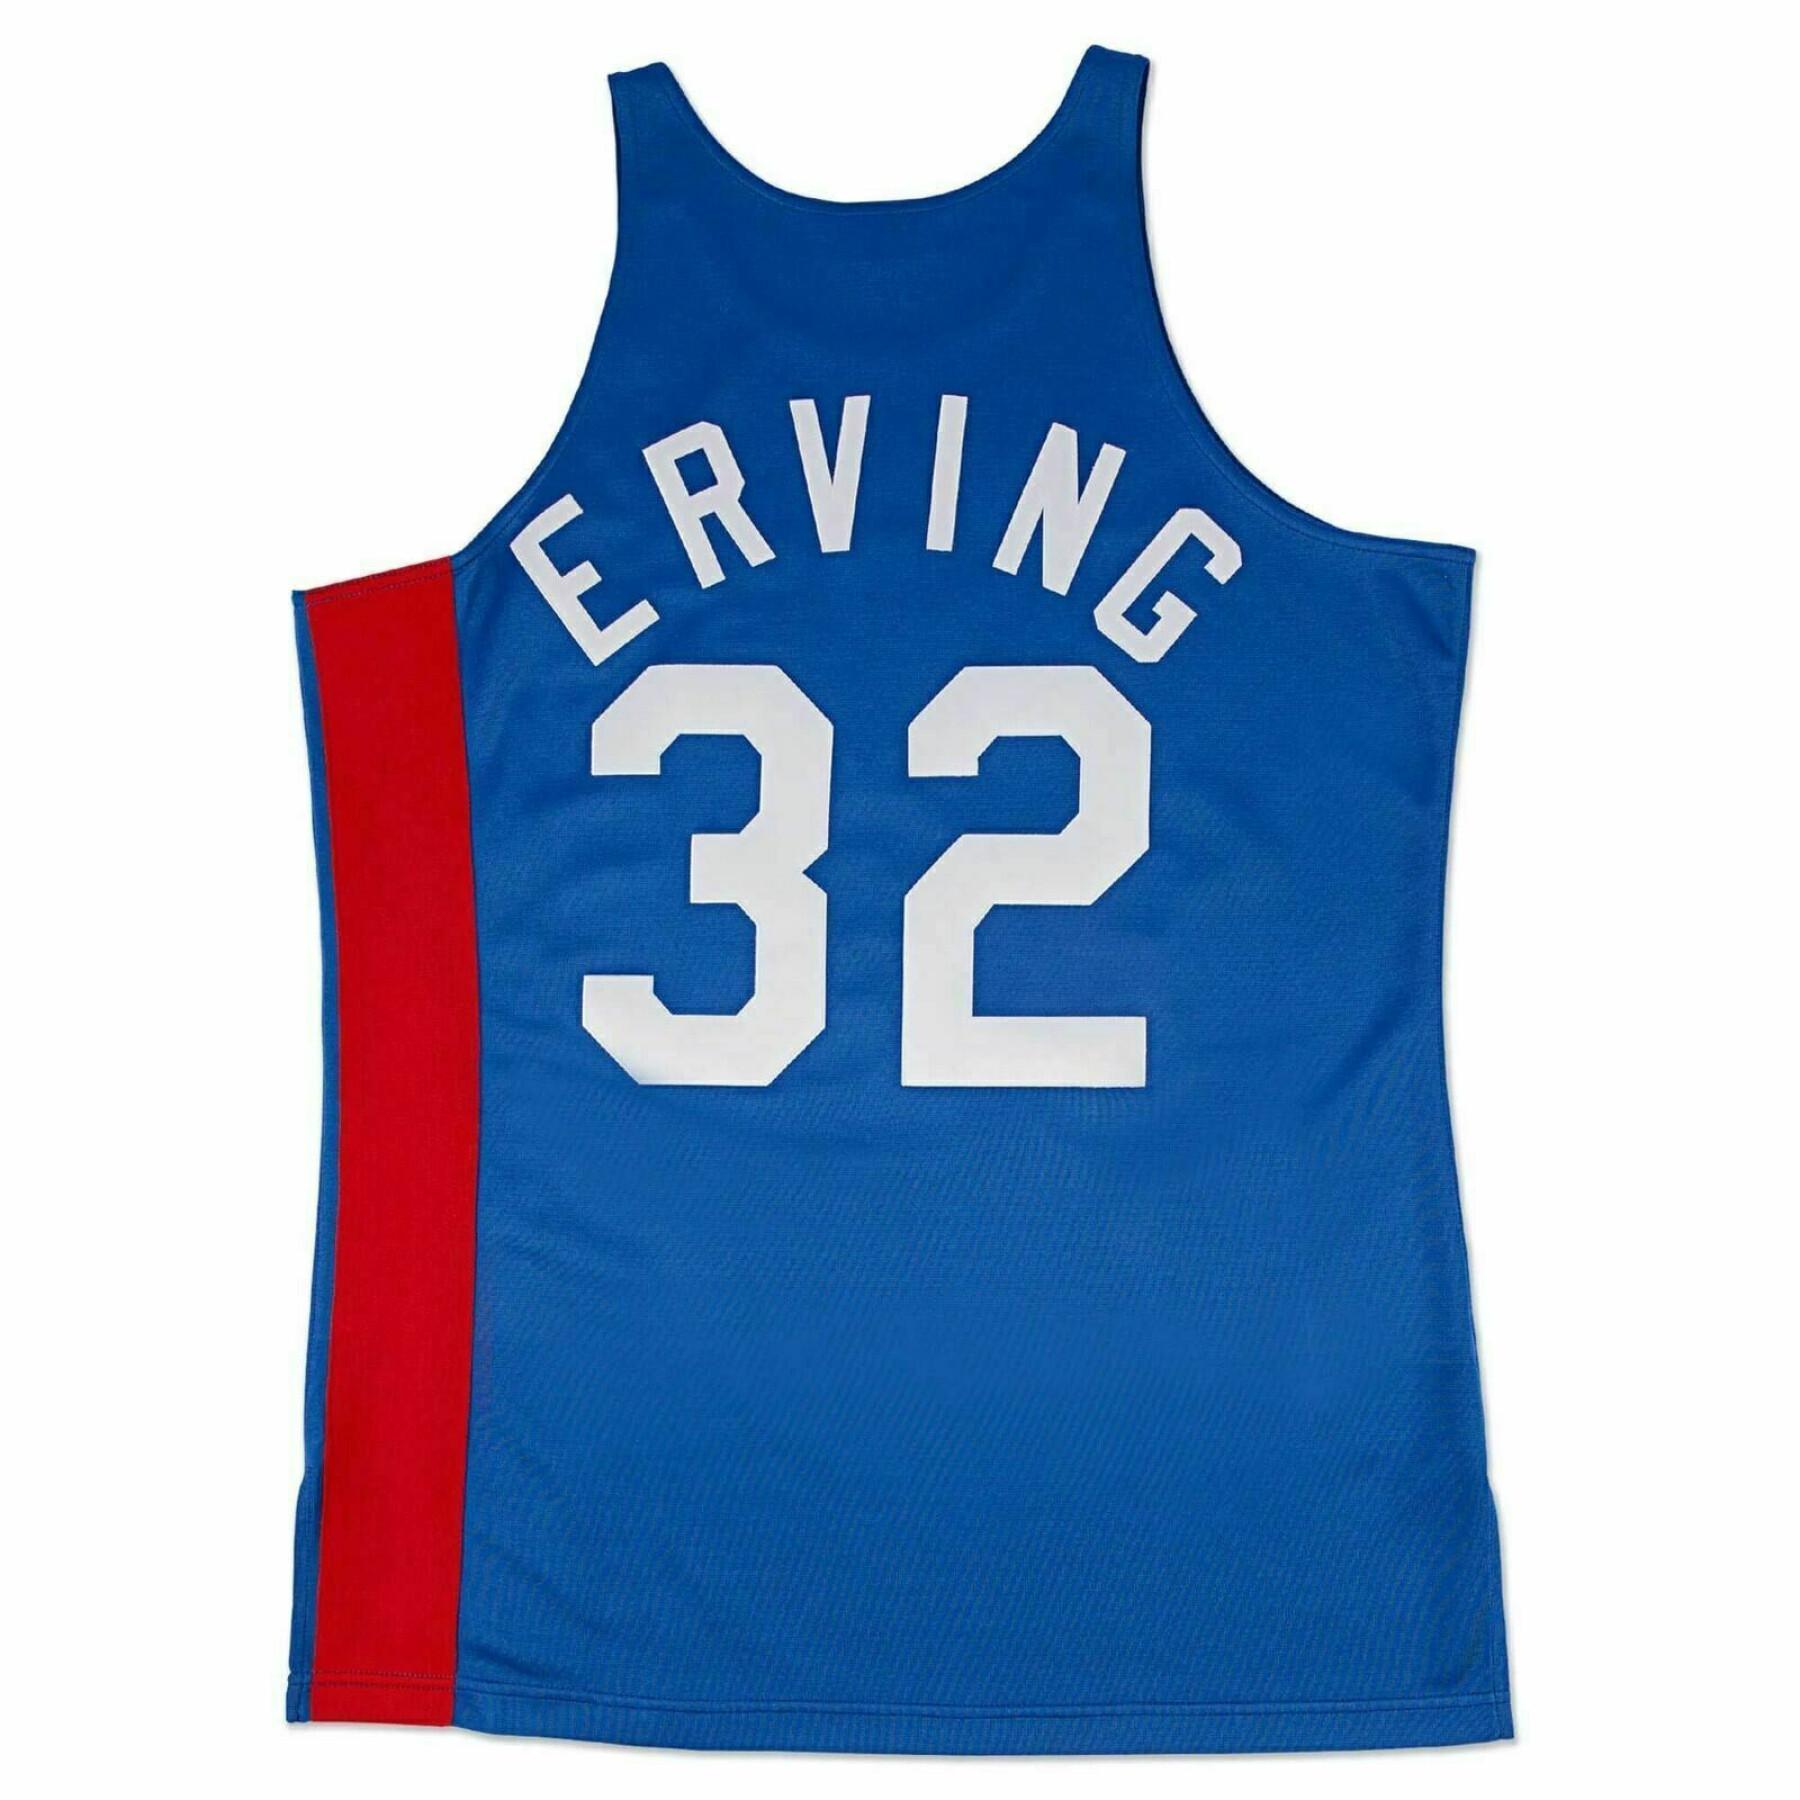 Jersey New York Nets nba authentic Julius Erving